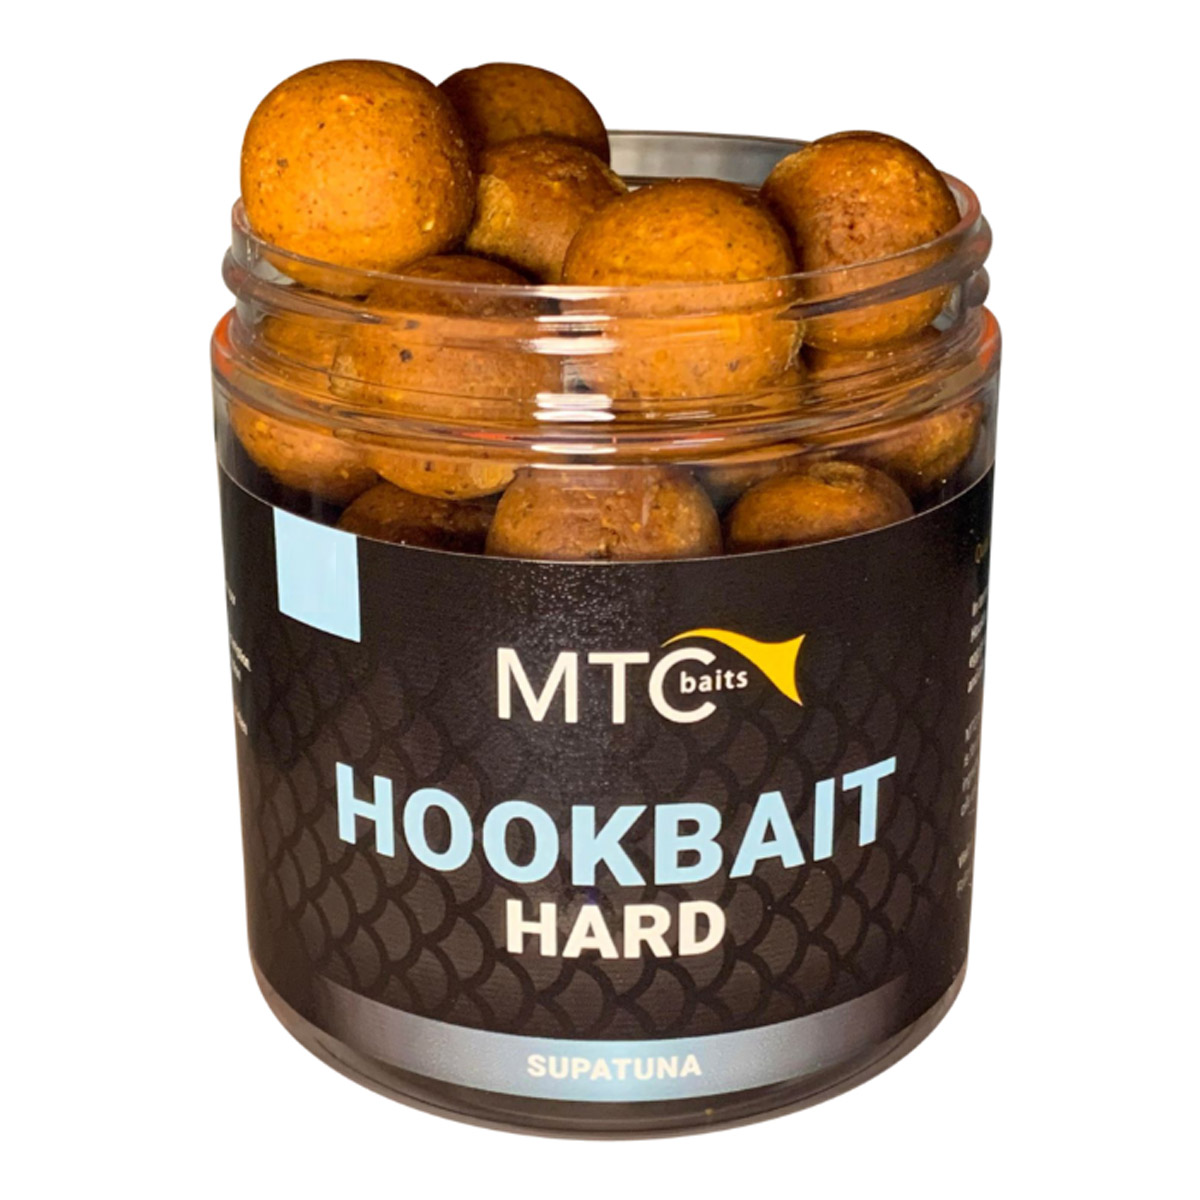 MTC Baits Hookbait Hard SupaTuna 16 MM